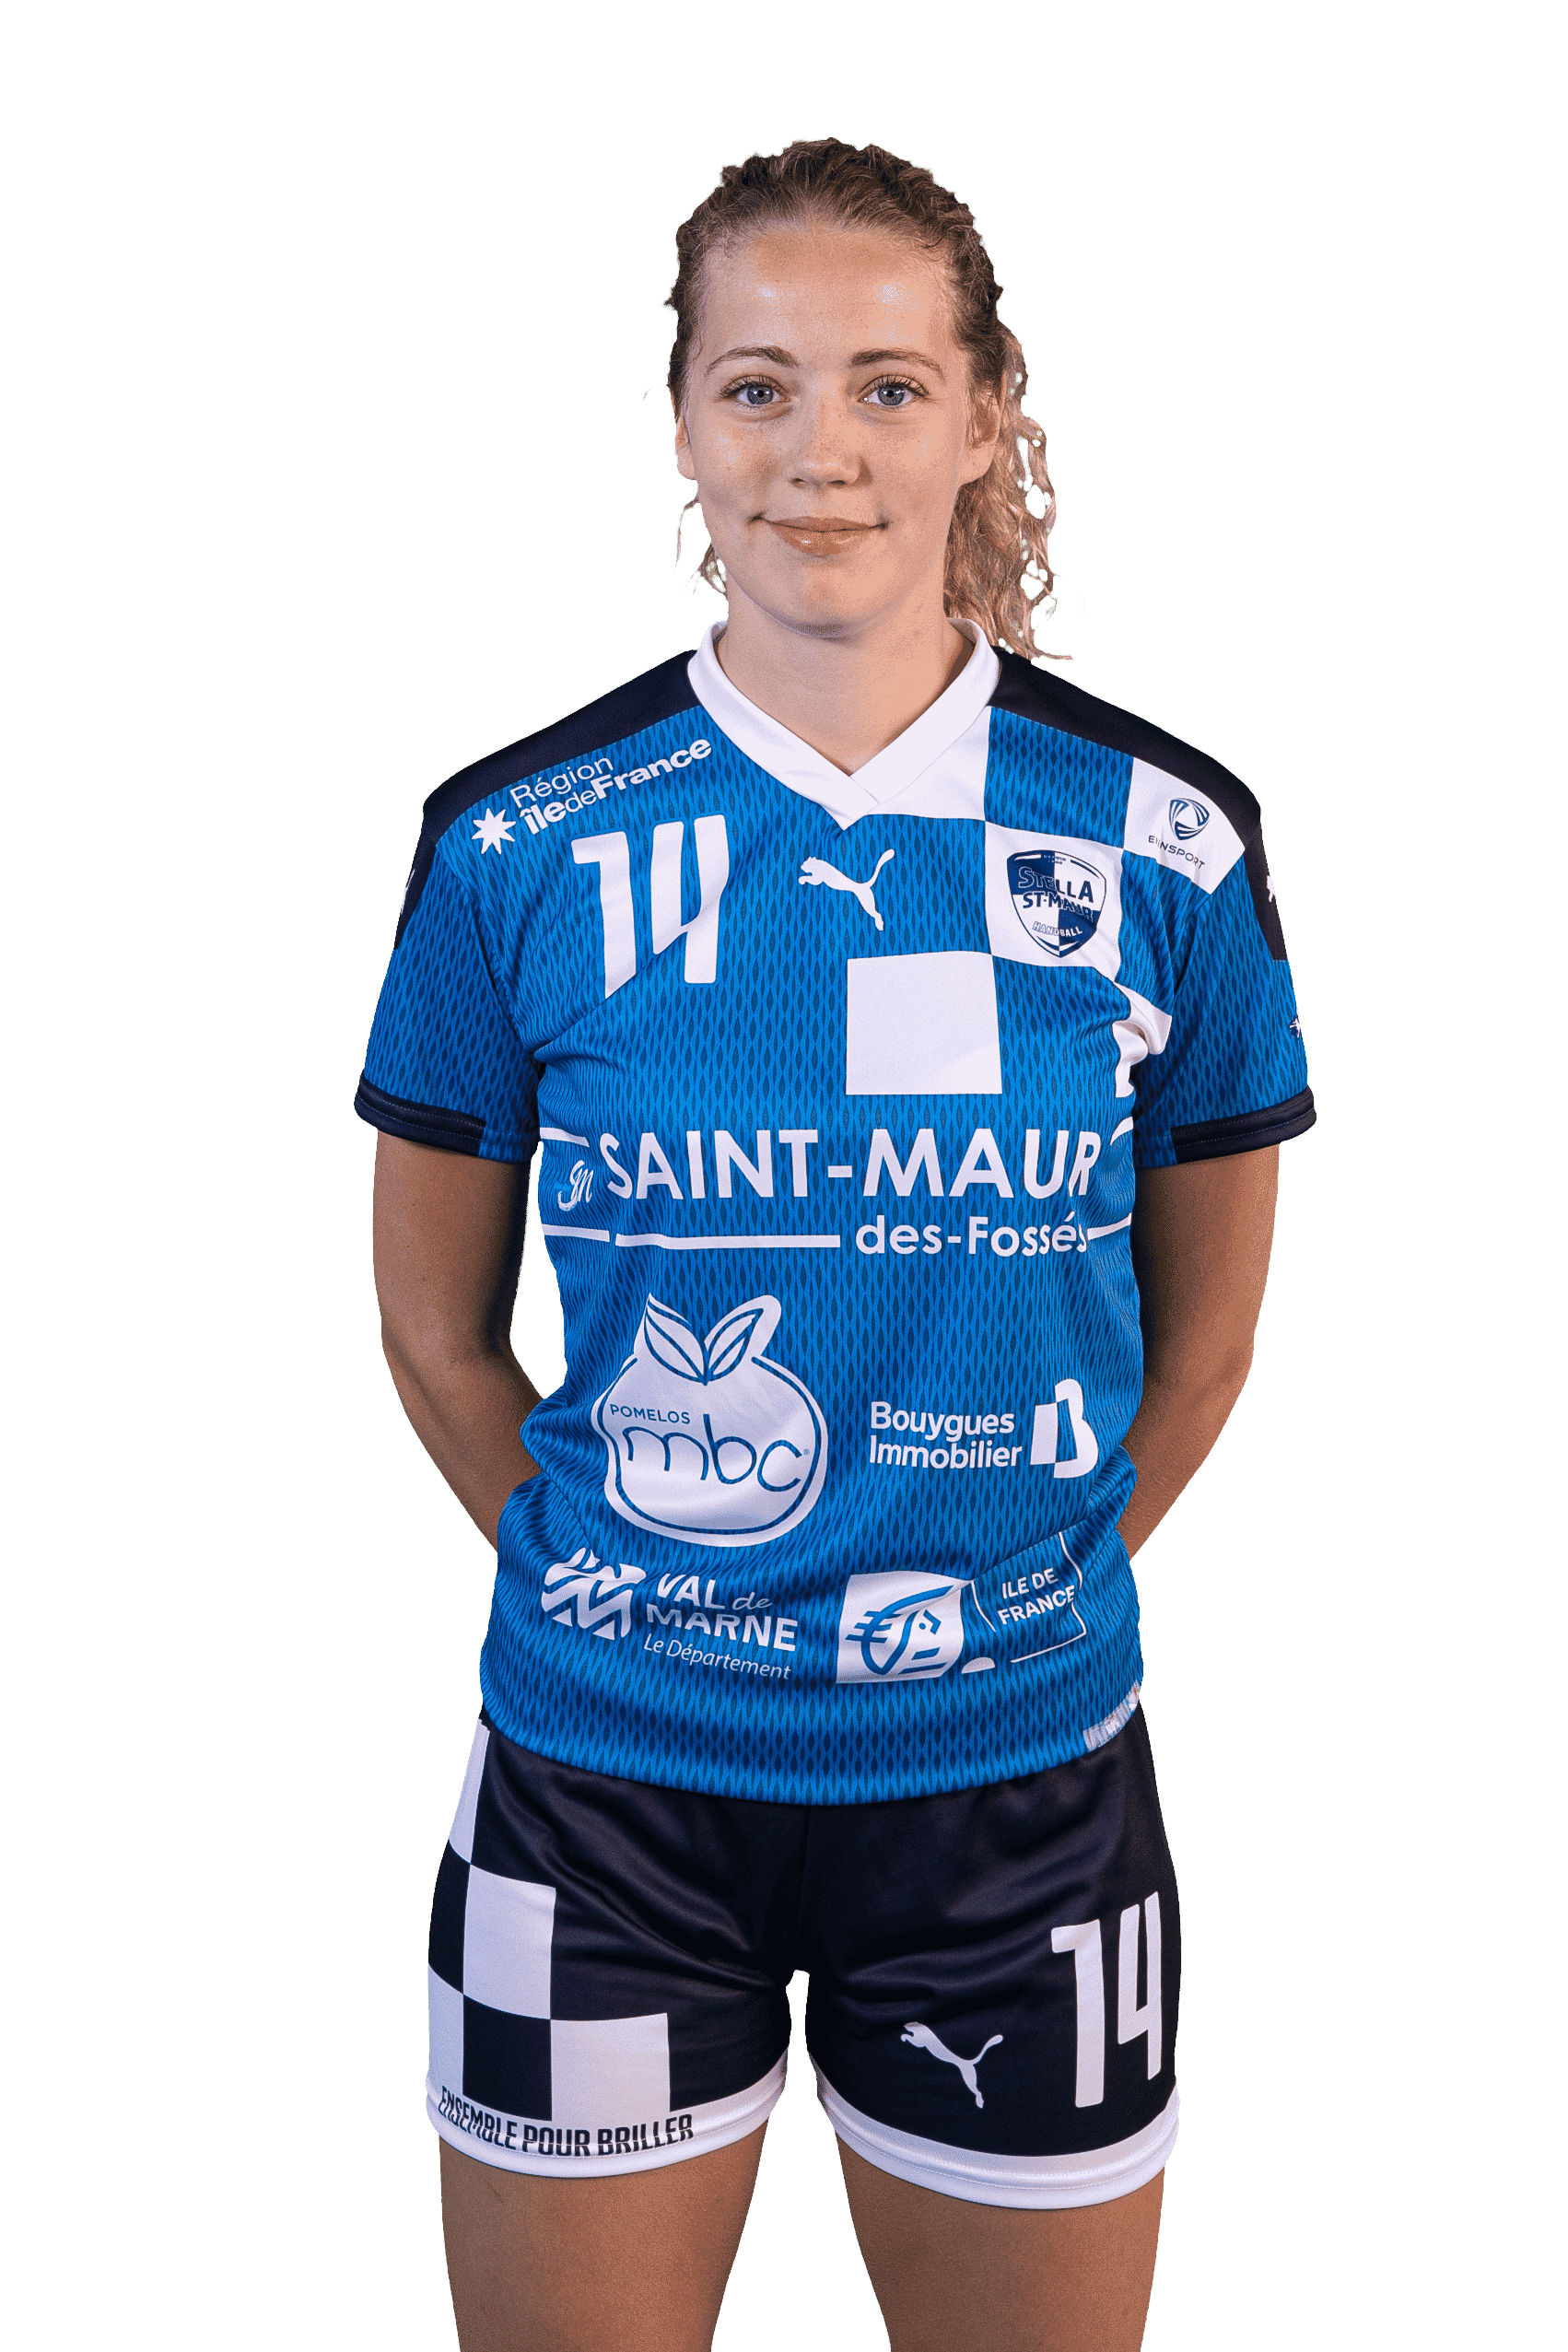 camille-tourigny - Ailière droite division 2 féminine de handball de Stella St-Maur Handball